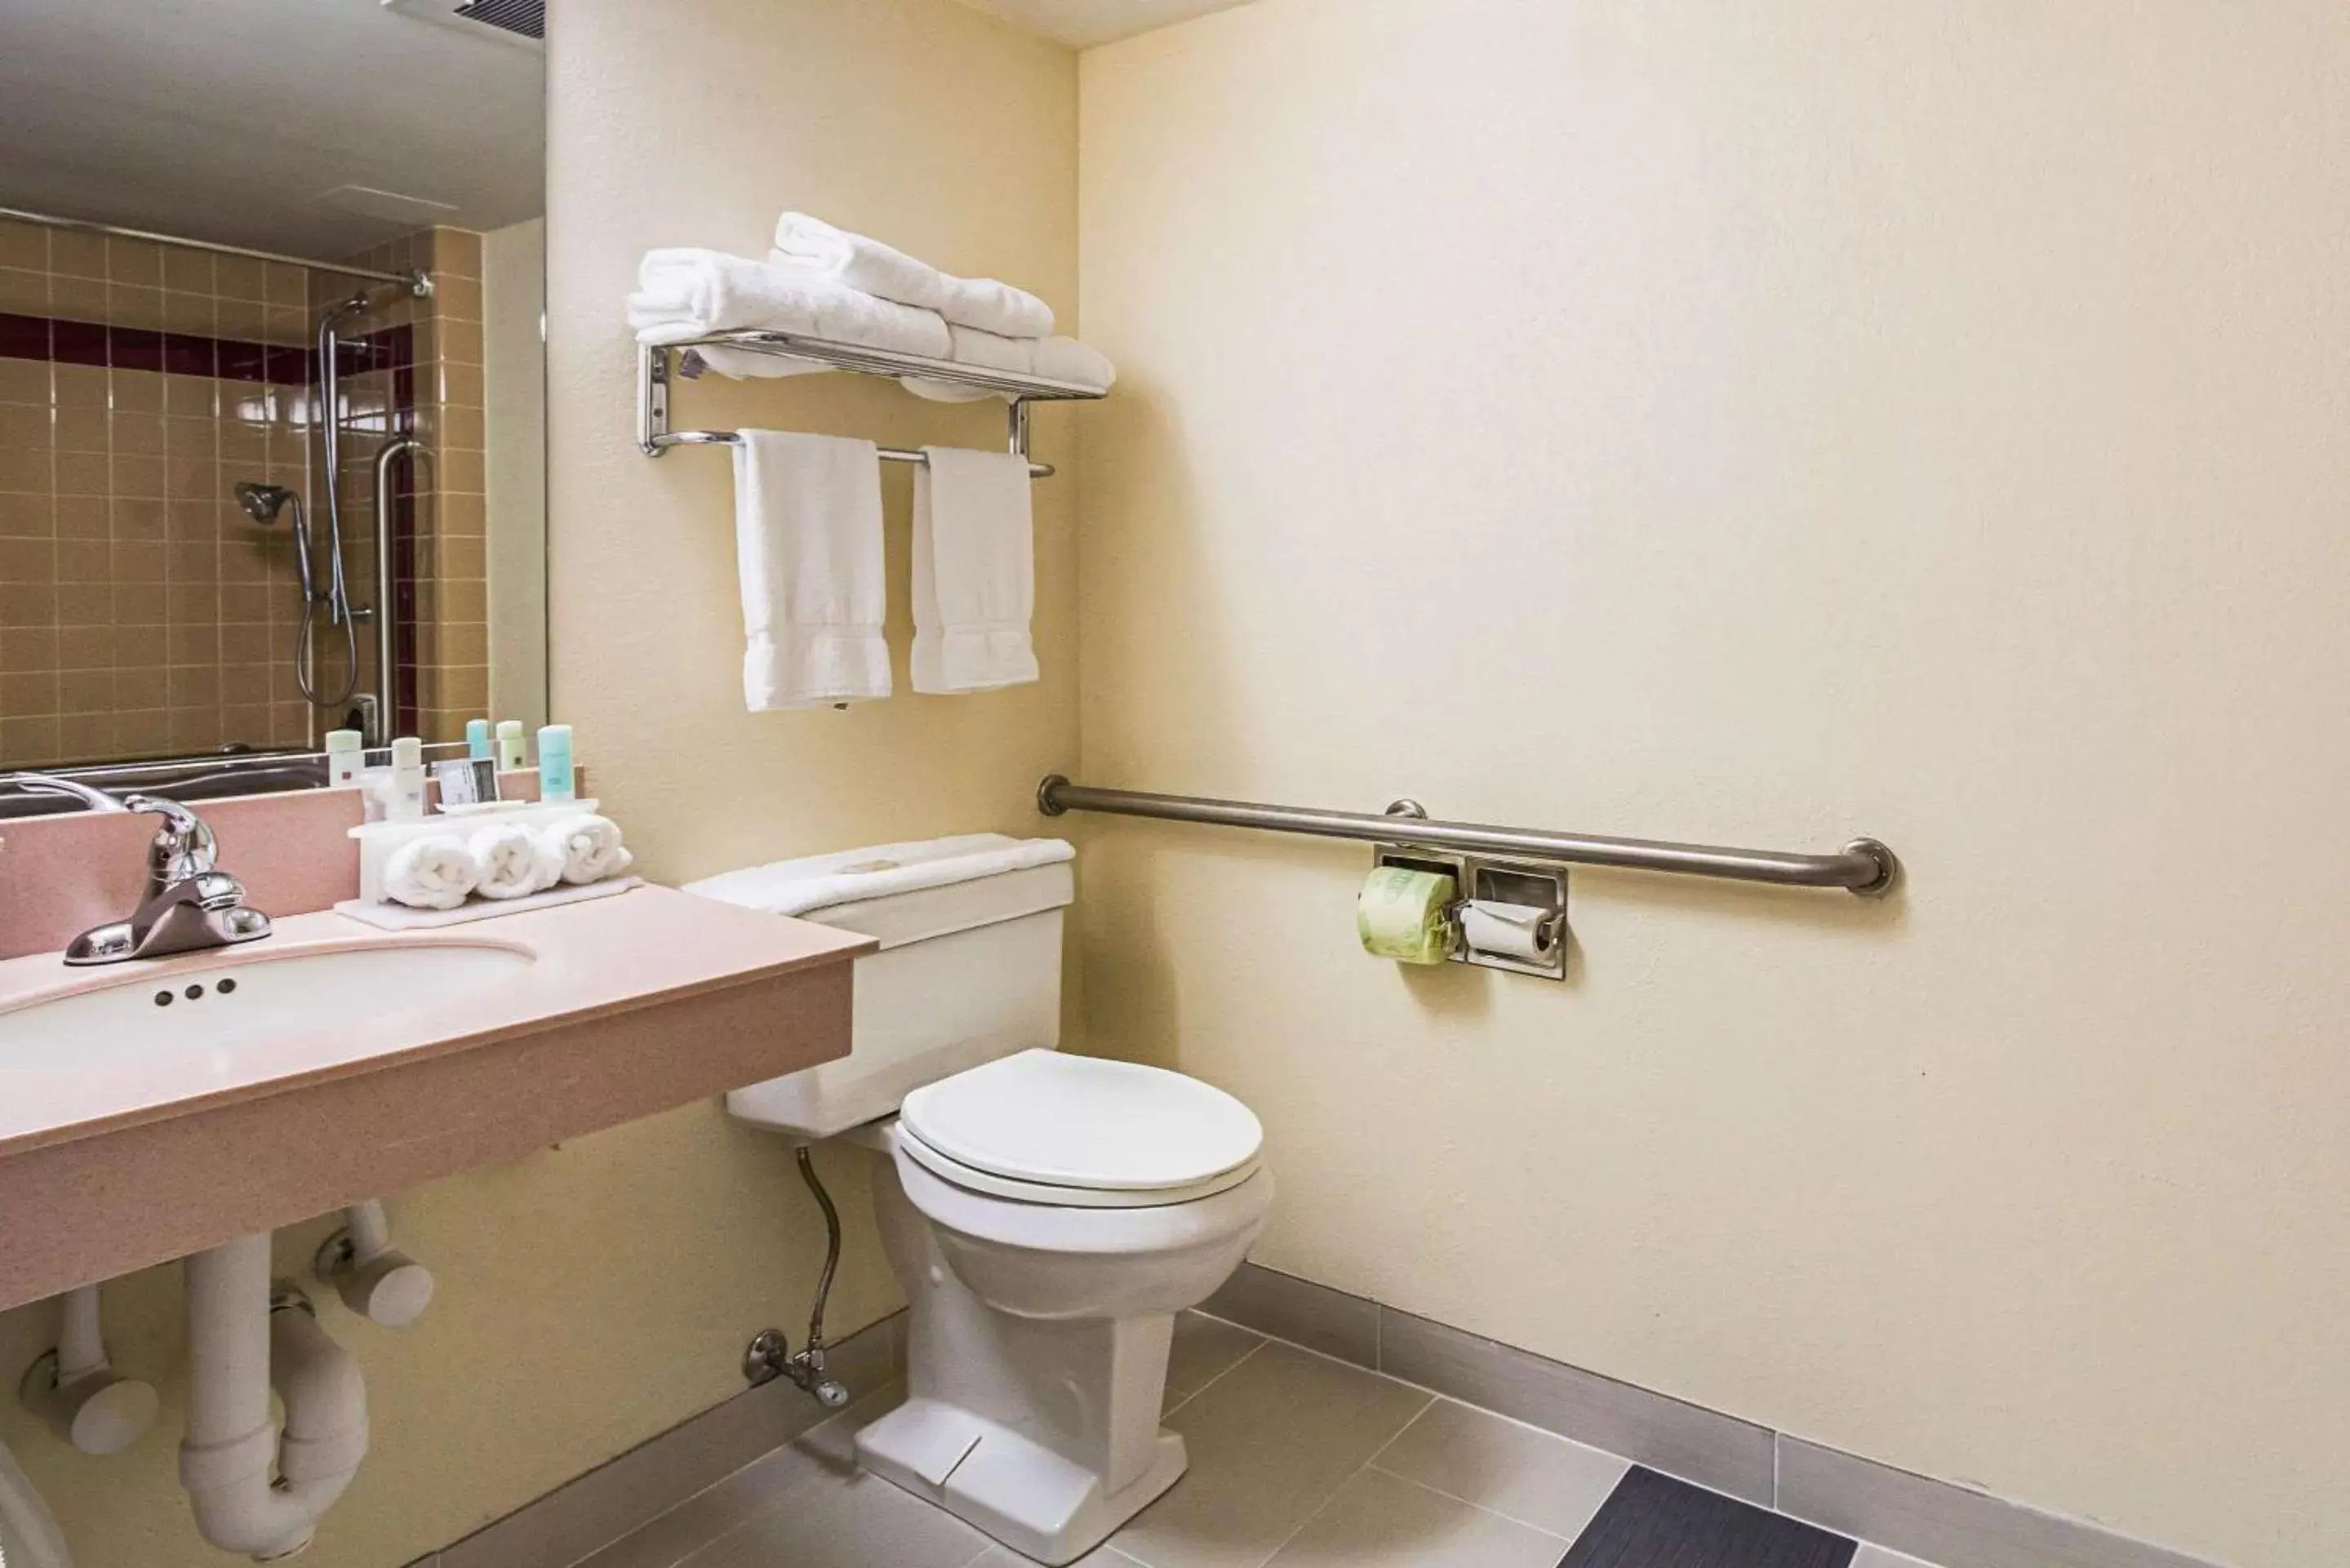 Photo of the whole room, Bathroom in Quality Inn & Suites Altoona Pennsylvania